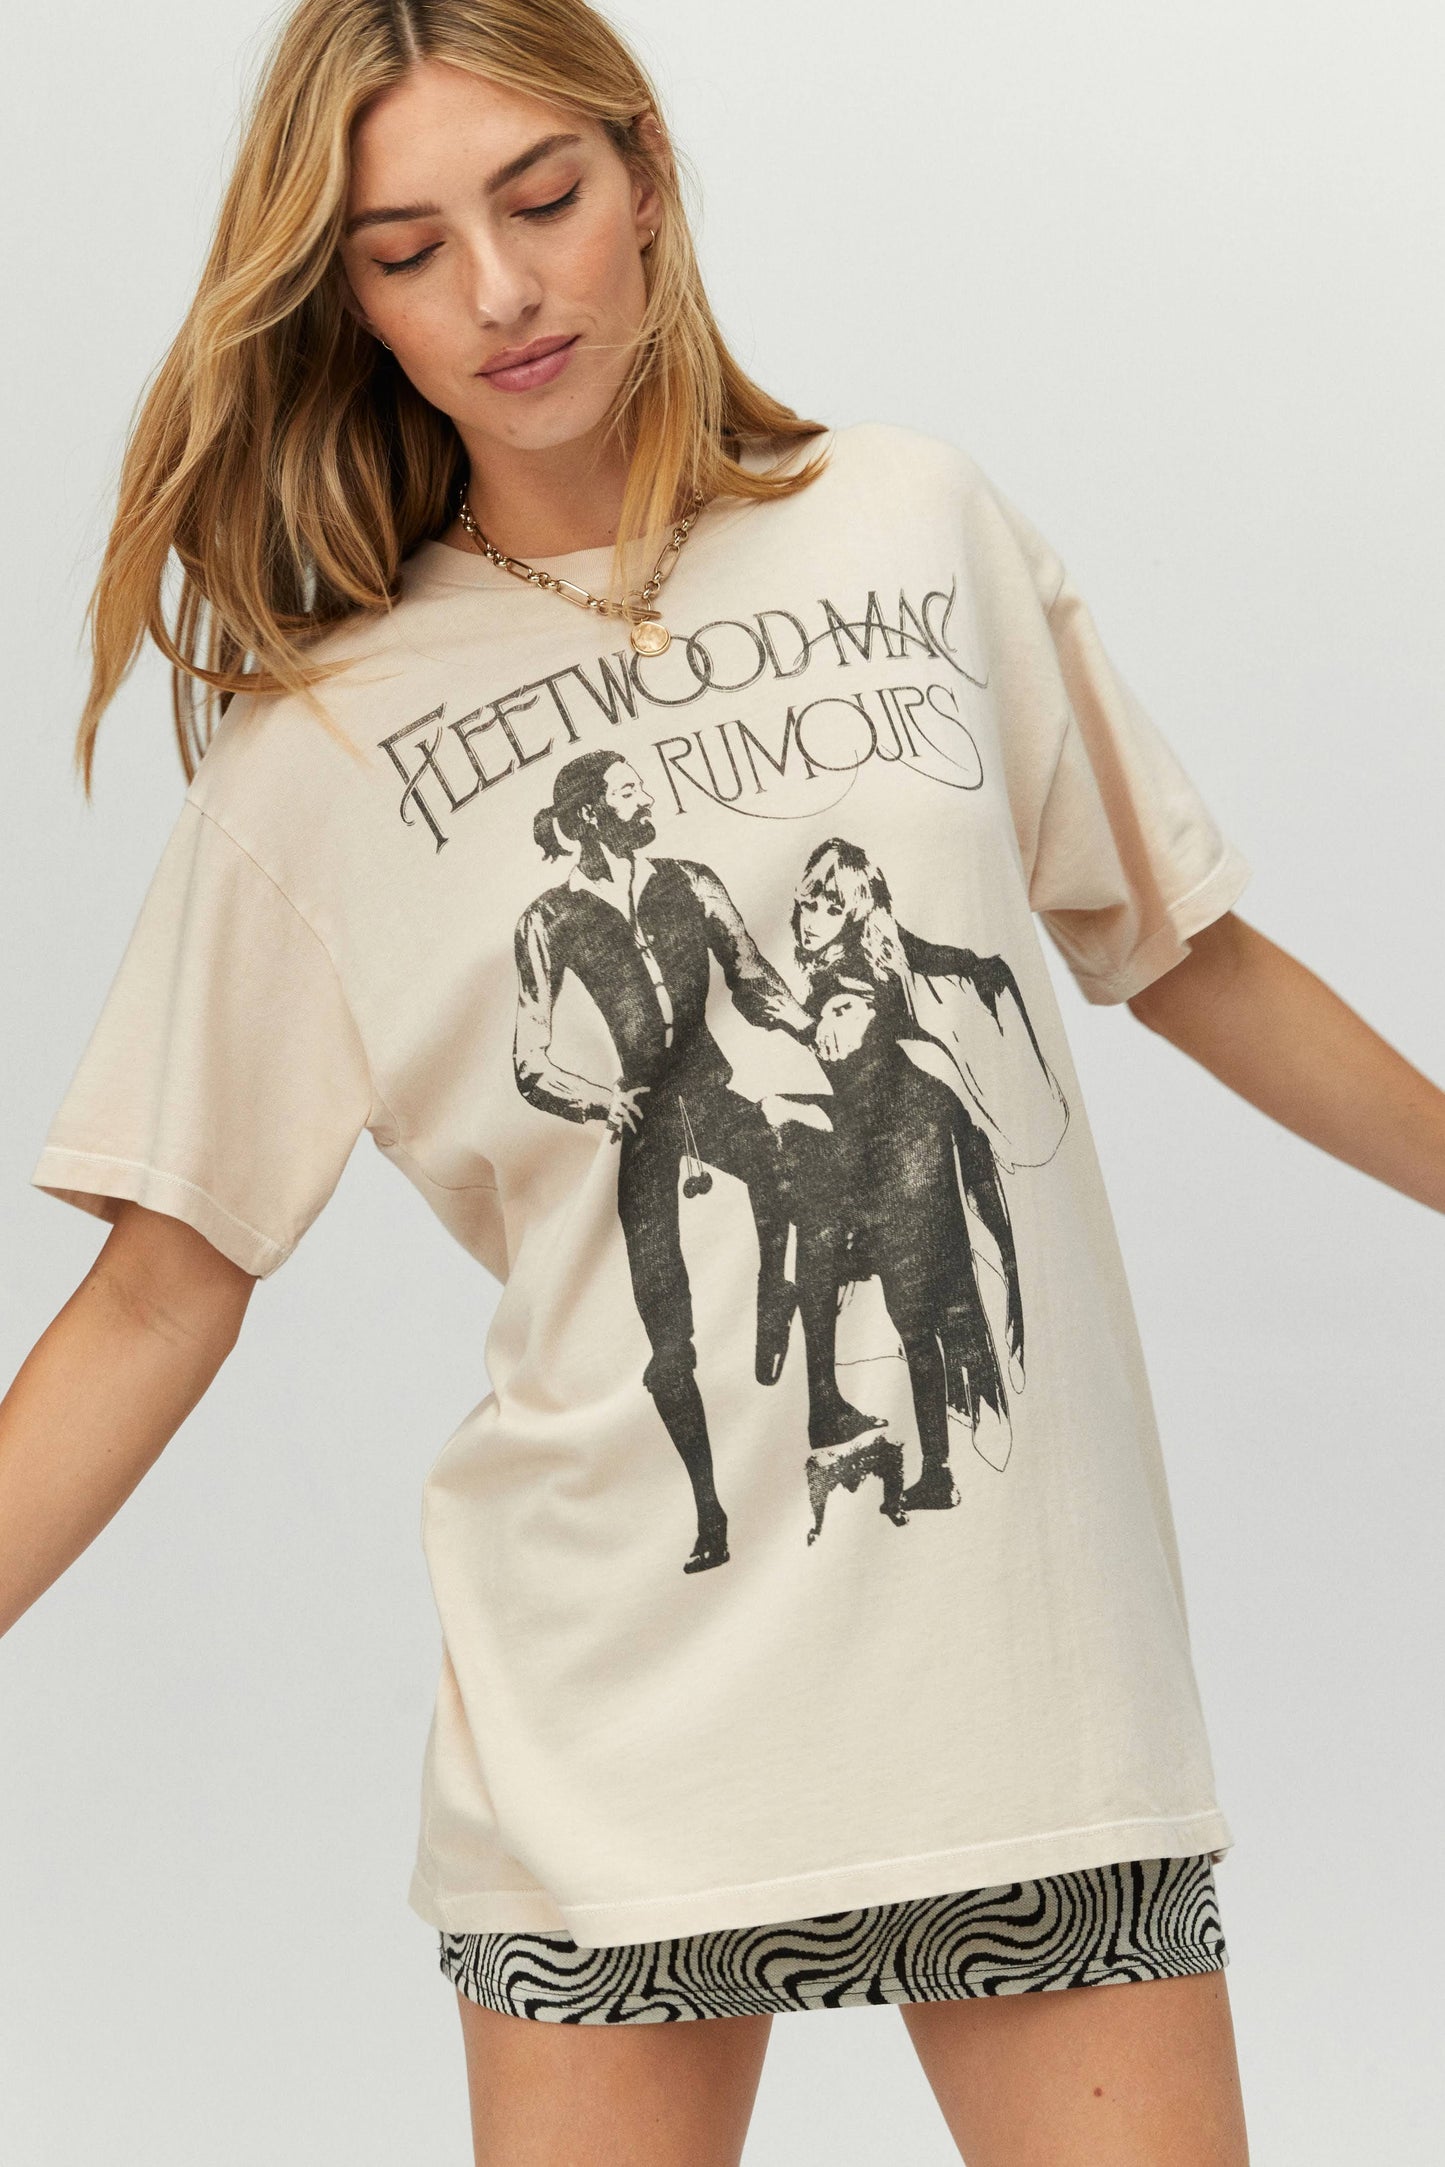 Fleetwood Mac Rumors Tee Dress in Sand